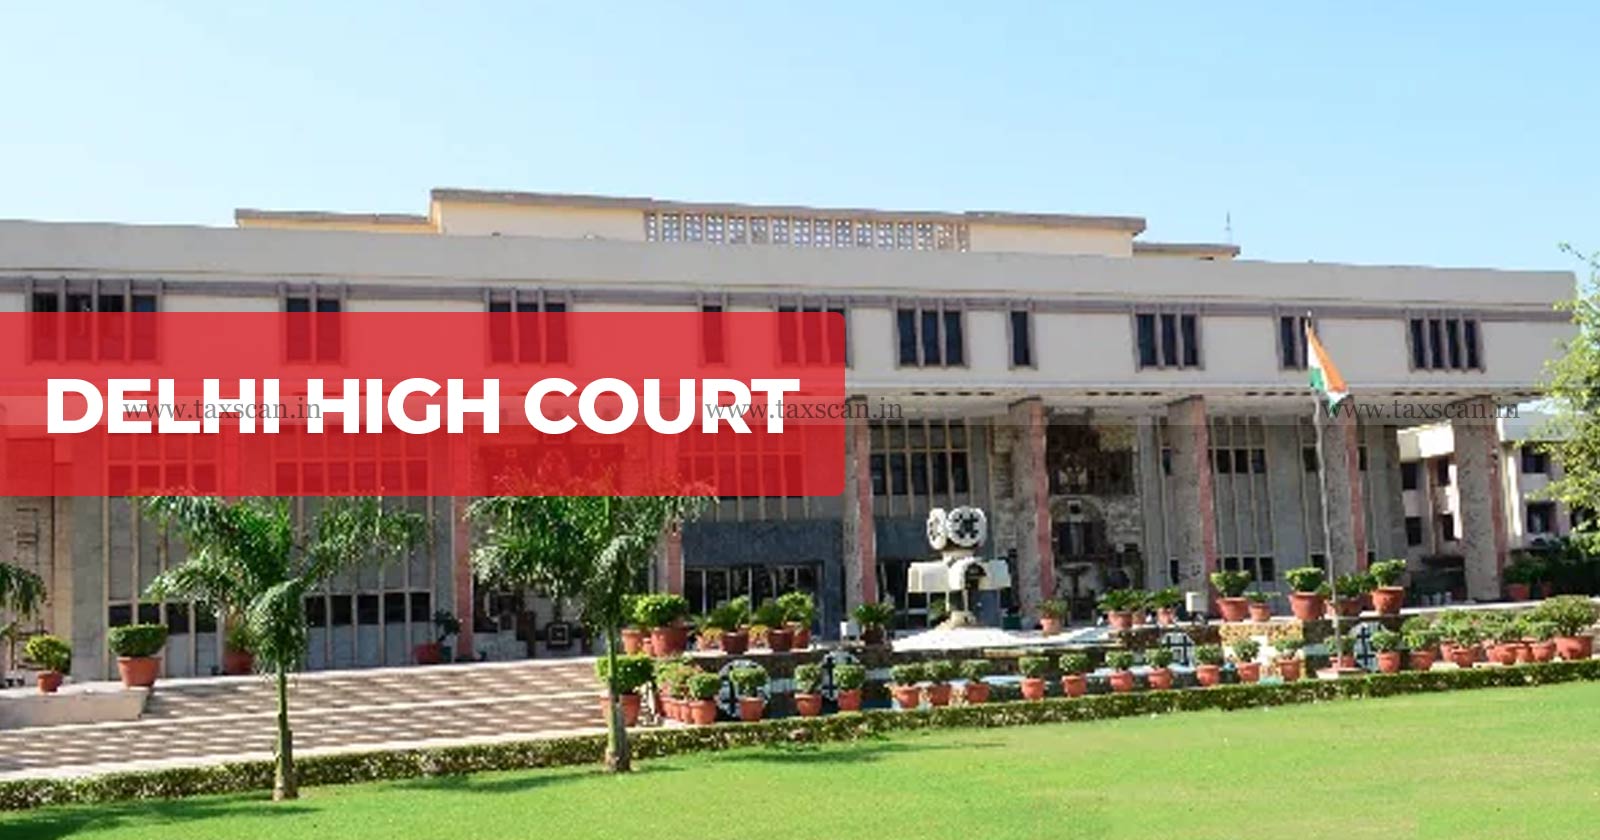 Delhi HC - Delhi High Court - High Court - Anticipatory Bail - Forgery and GST evasion - Delhi HC denies Anticipatory Bail to CA accused of Forgery and GST evasion - taxscan